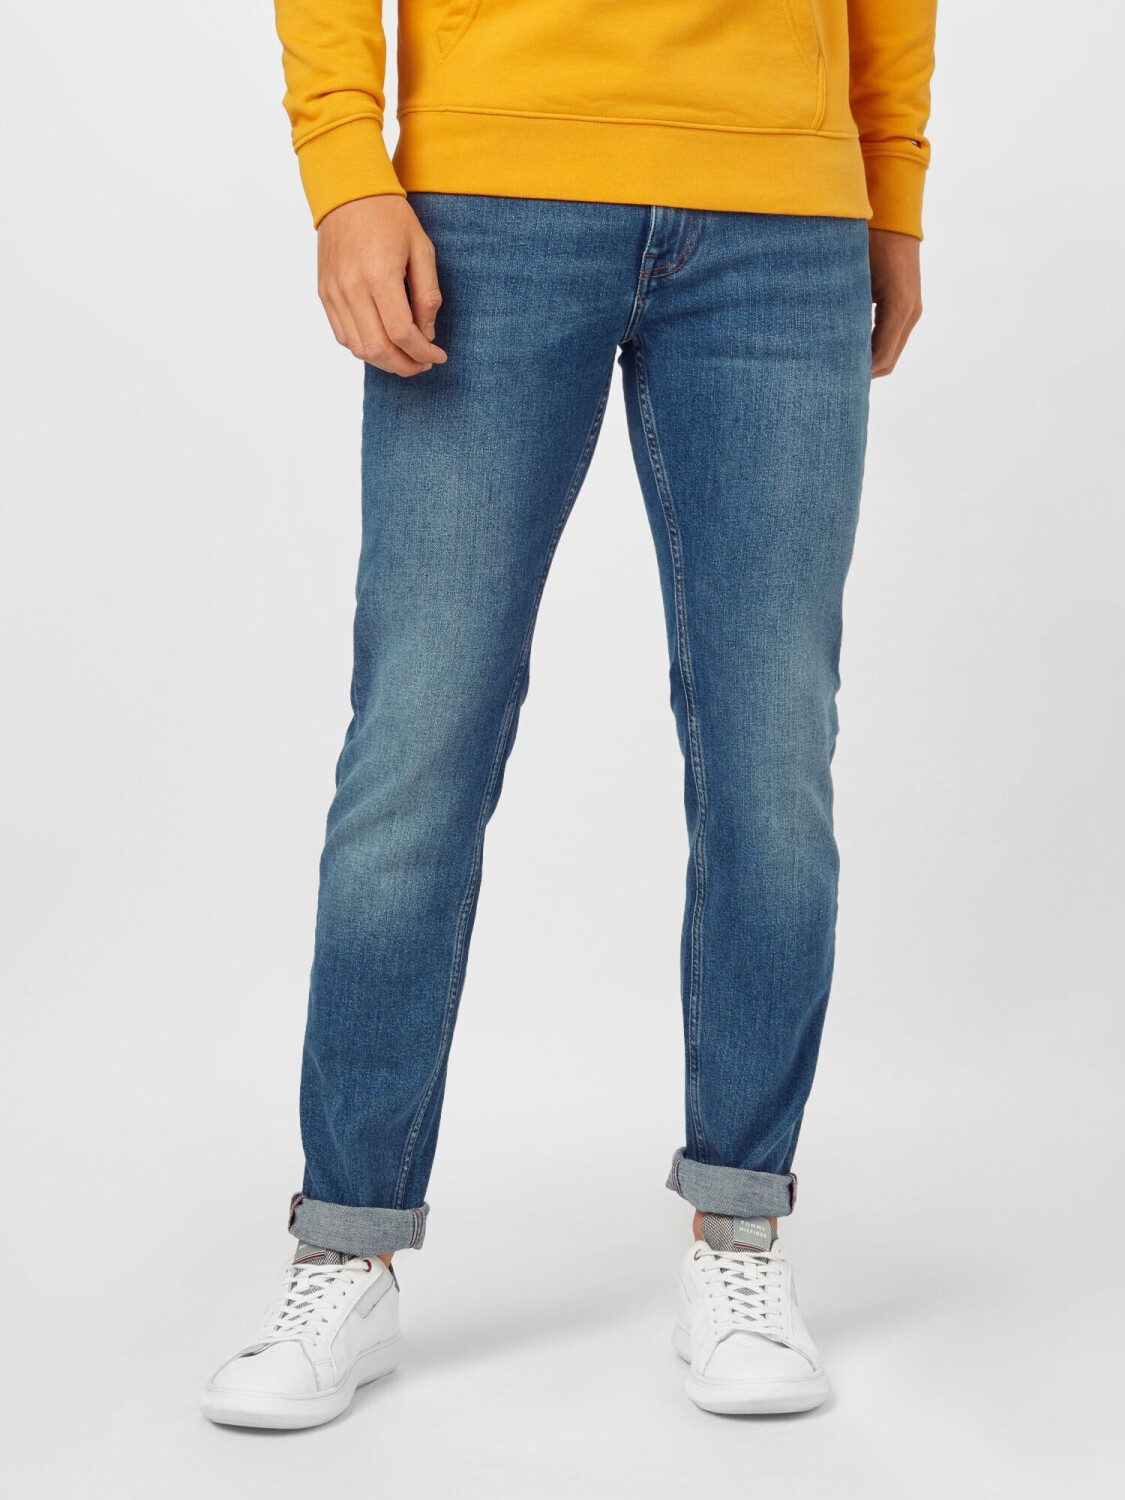 Tommy Hilfiger Denton Straight Jeans (MW0MW15603) boston indigo ab 63,99 €  | Preisvergleich bei